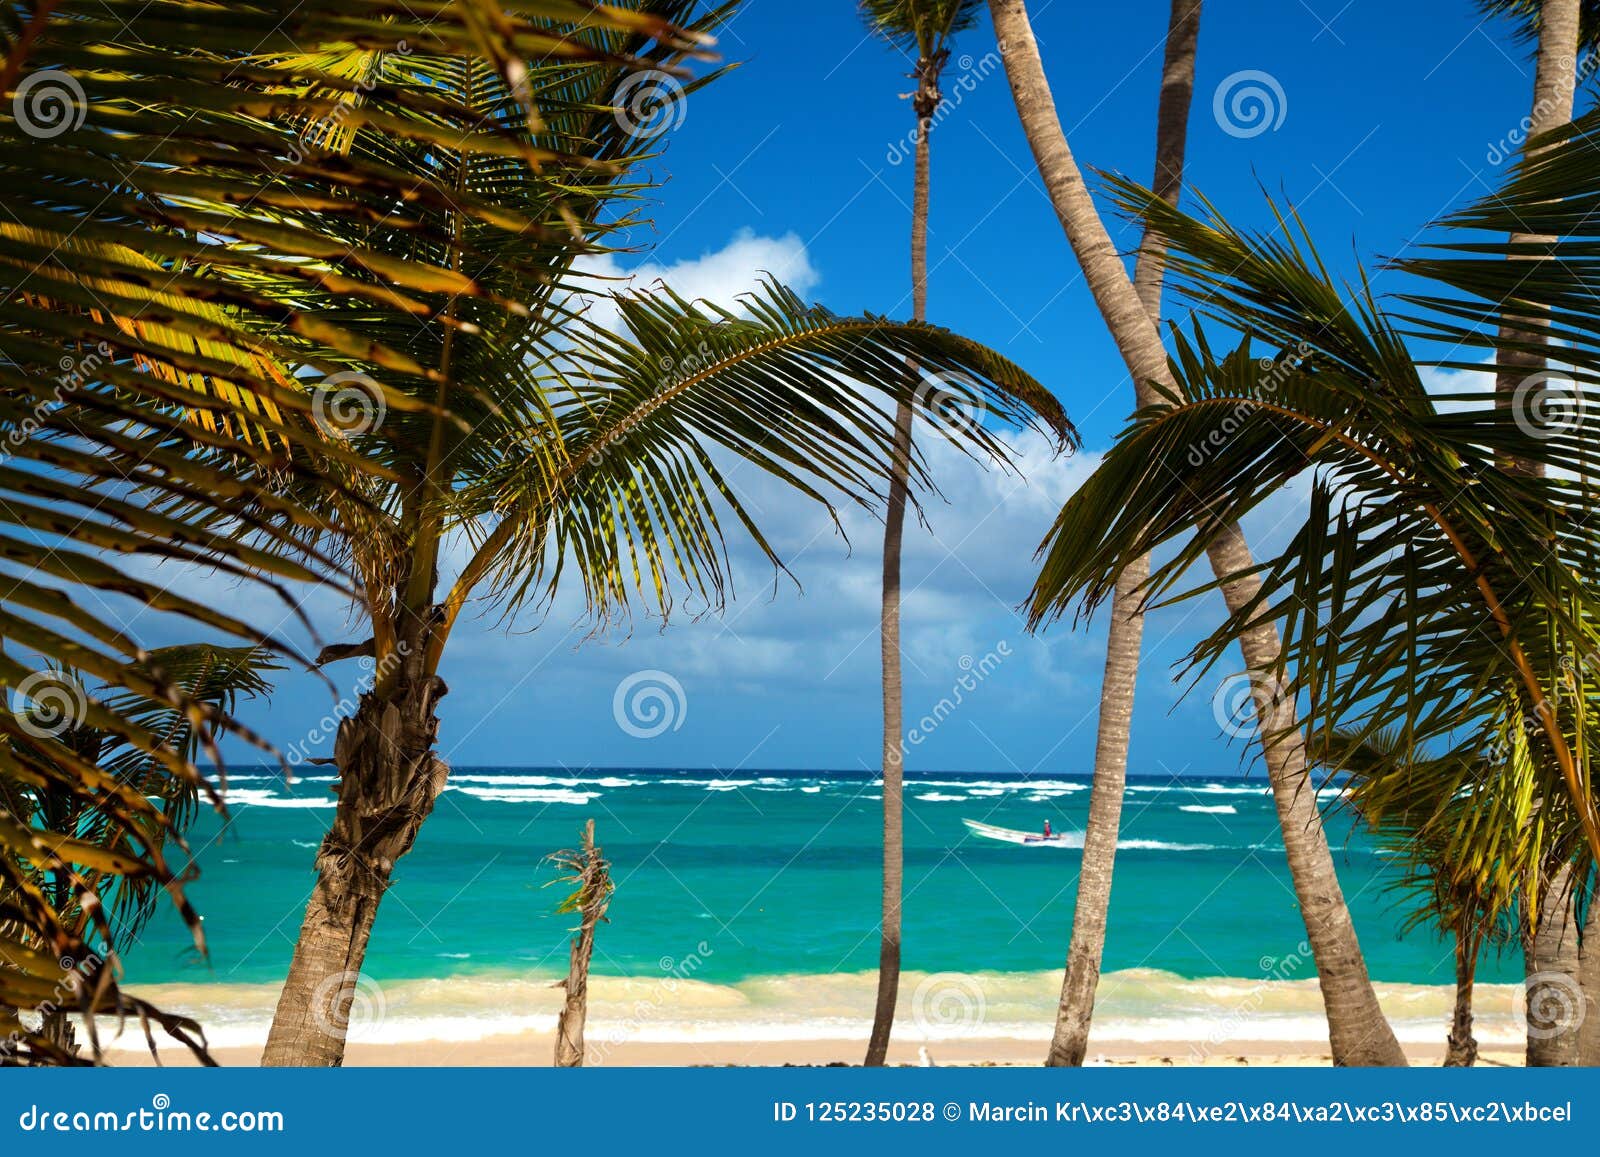 dominican republic, punta cana, saona island - mano juan beach. fishermen`s village